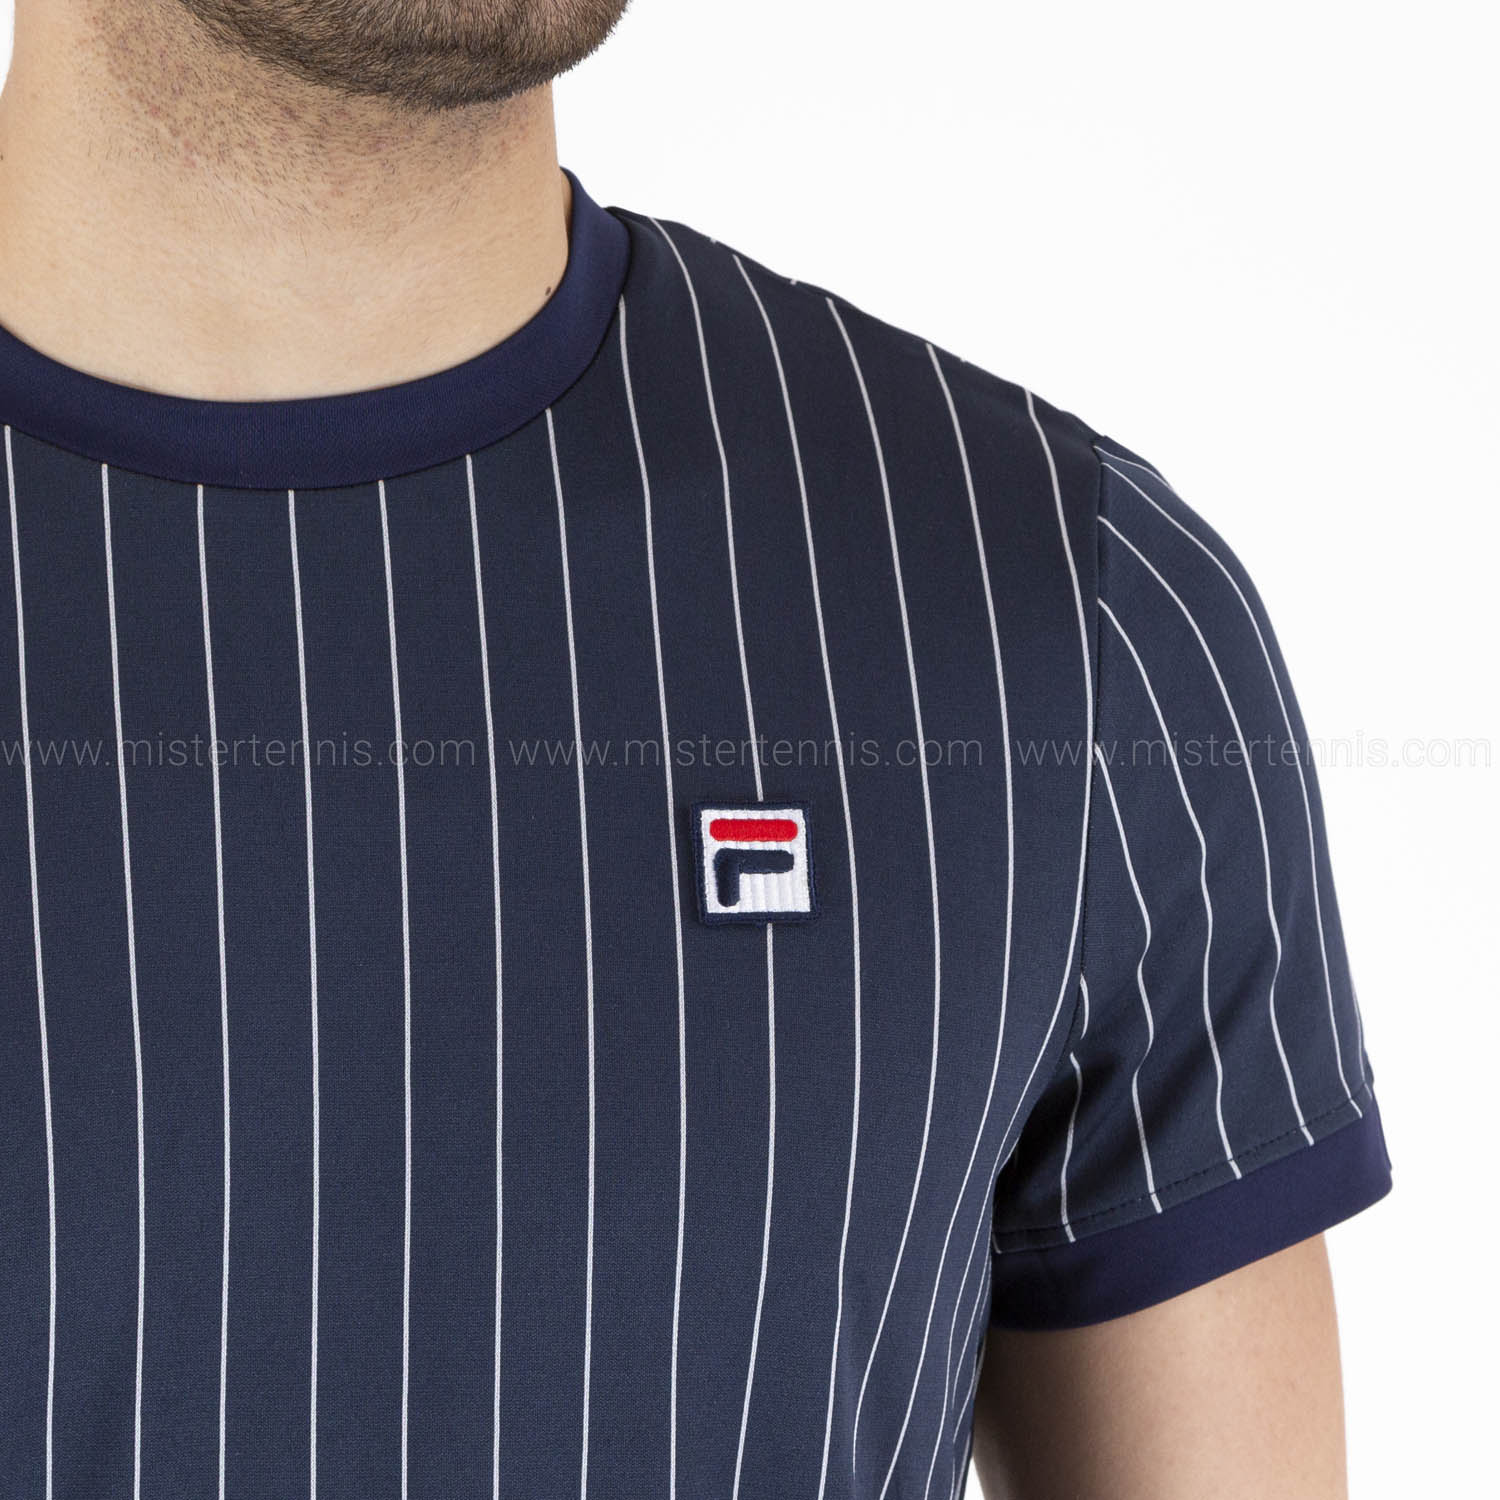 Fila Stripes Camiseta - Navy/White